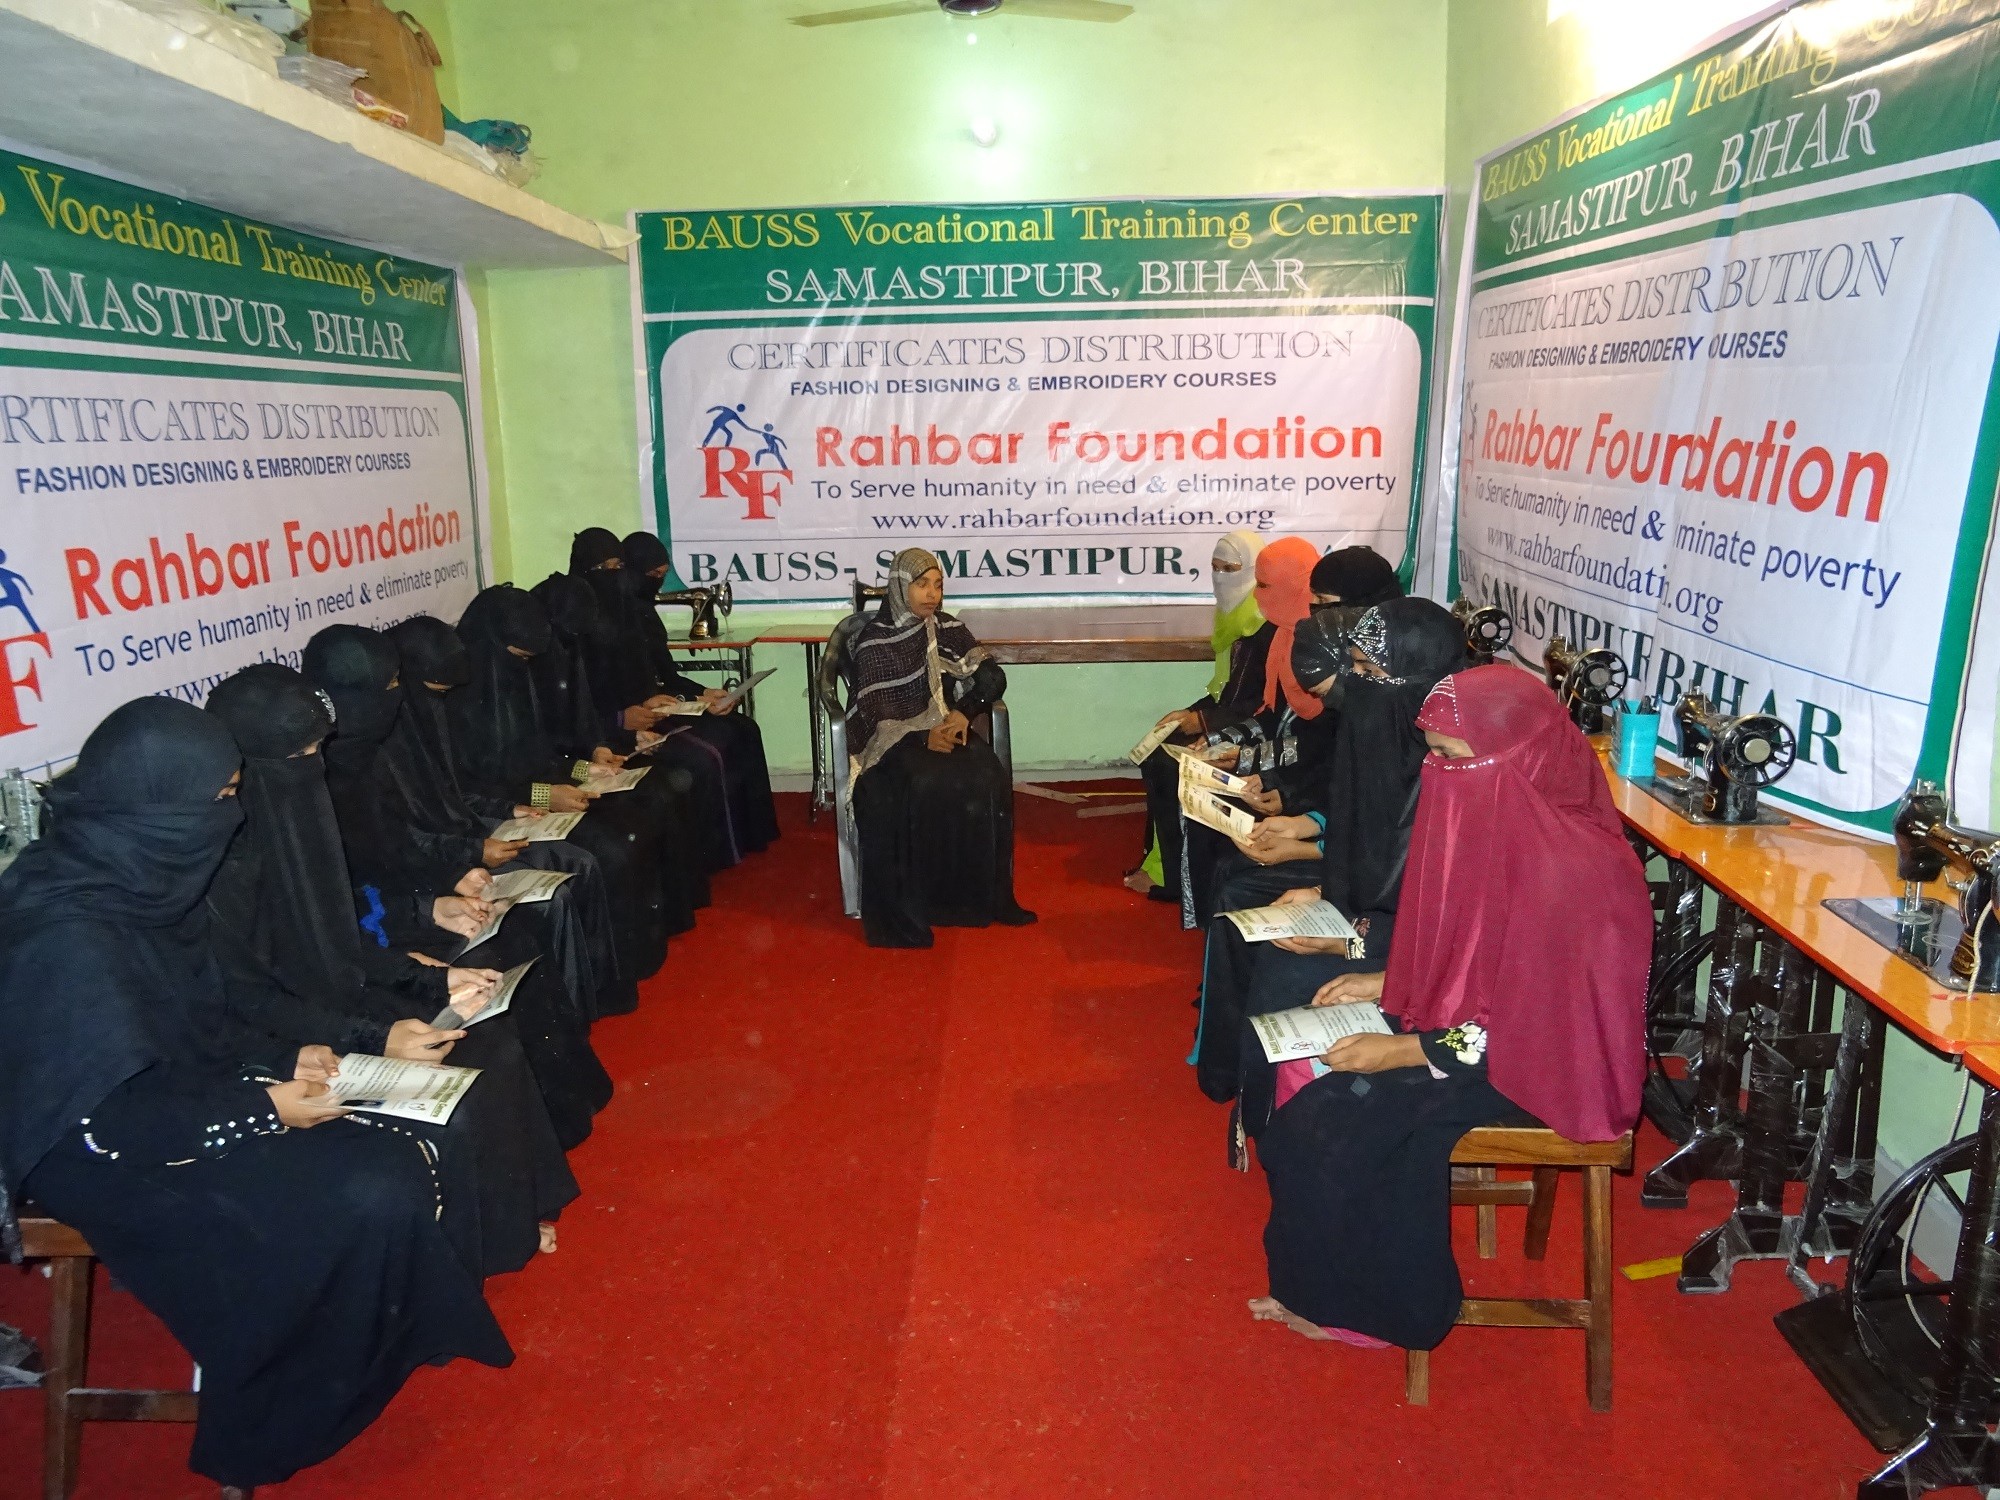 BAUSS Vocational Training Center at Samastipur- BIHAR